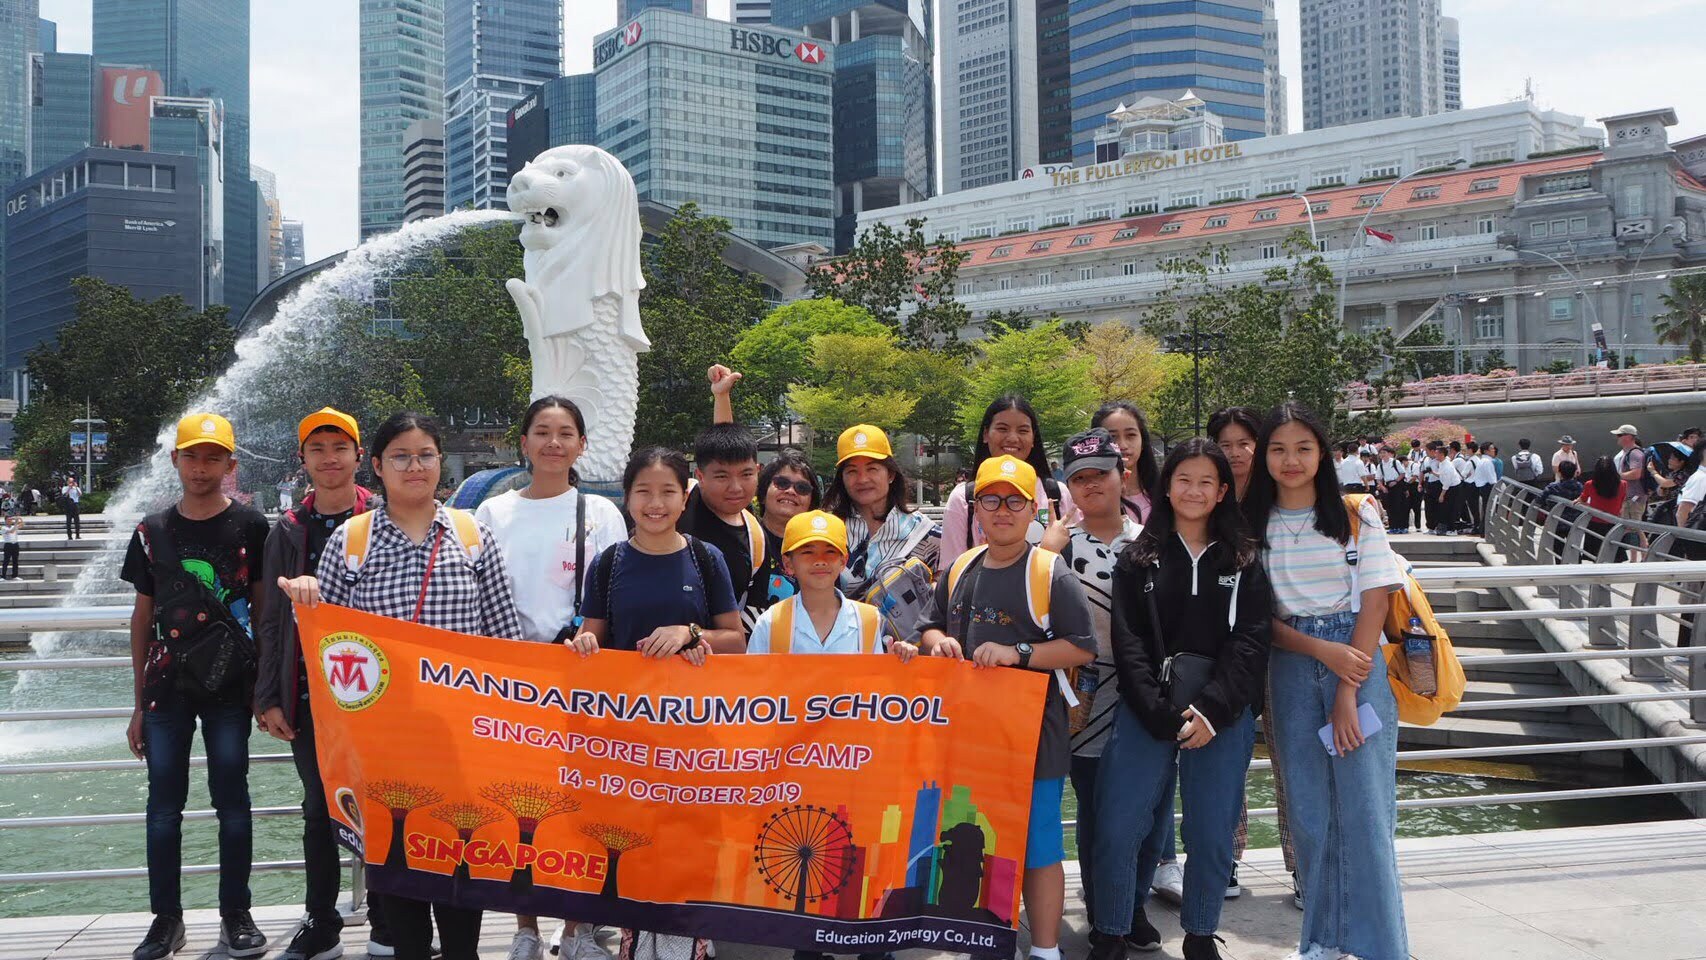 Singapore English camp 2019 Mandanarumol School